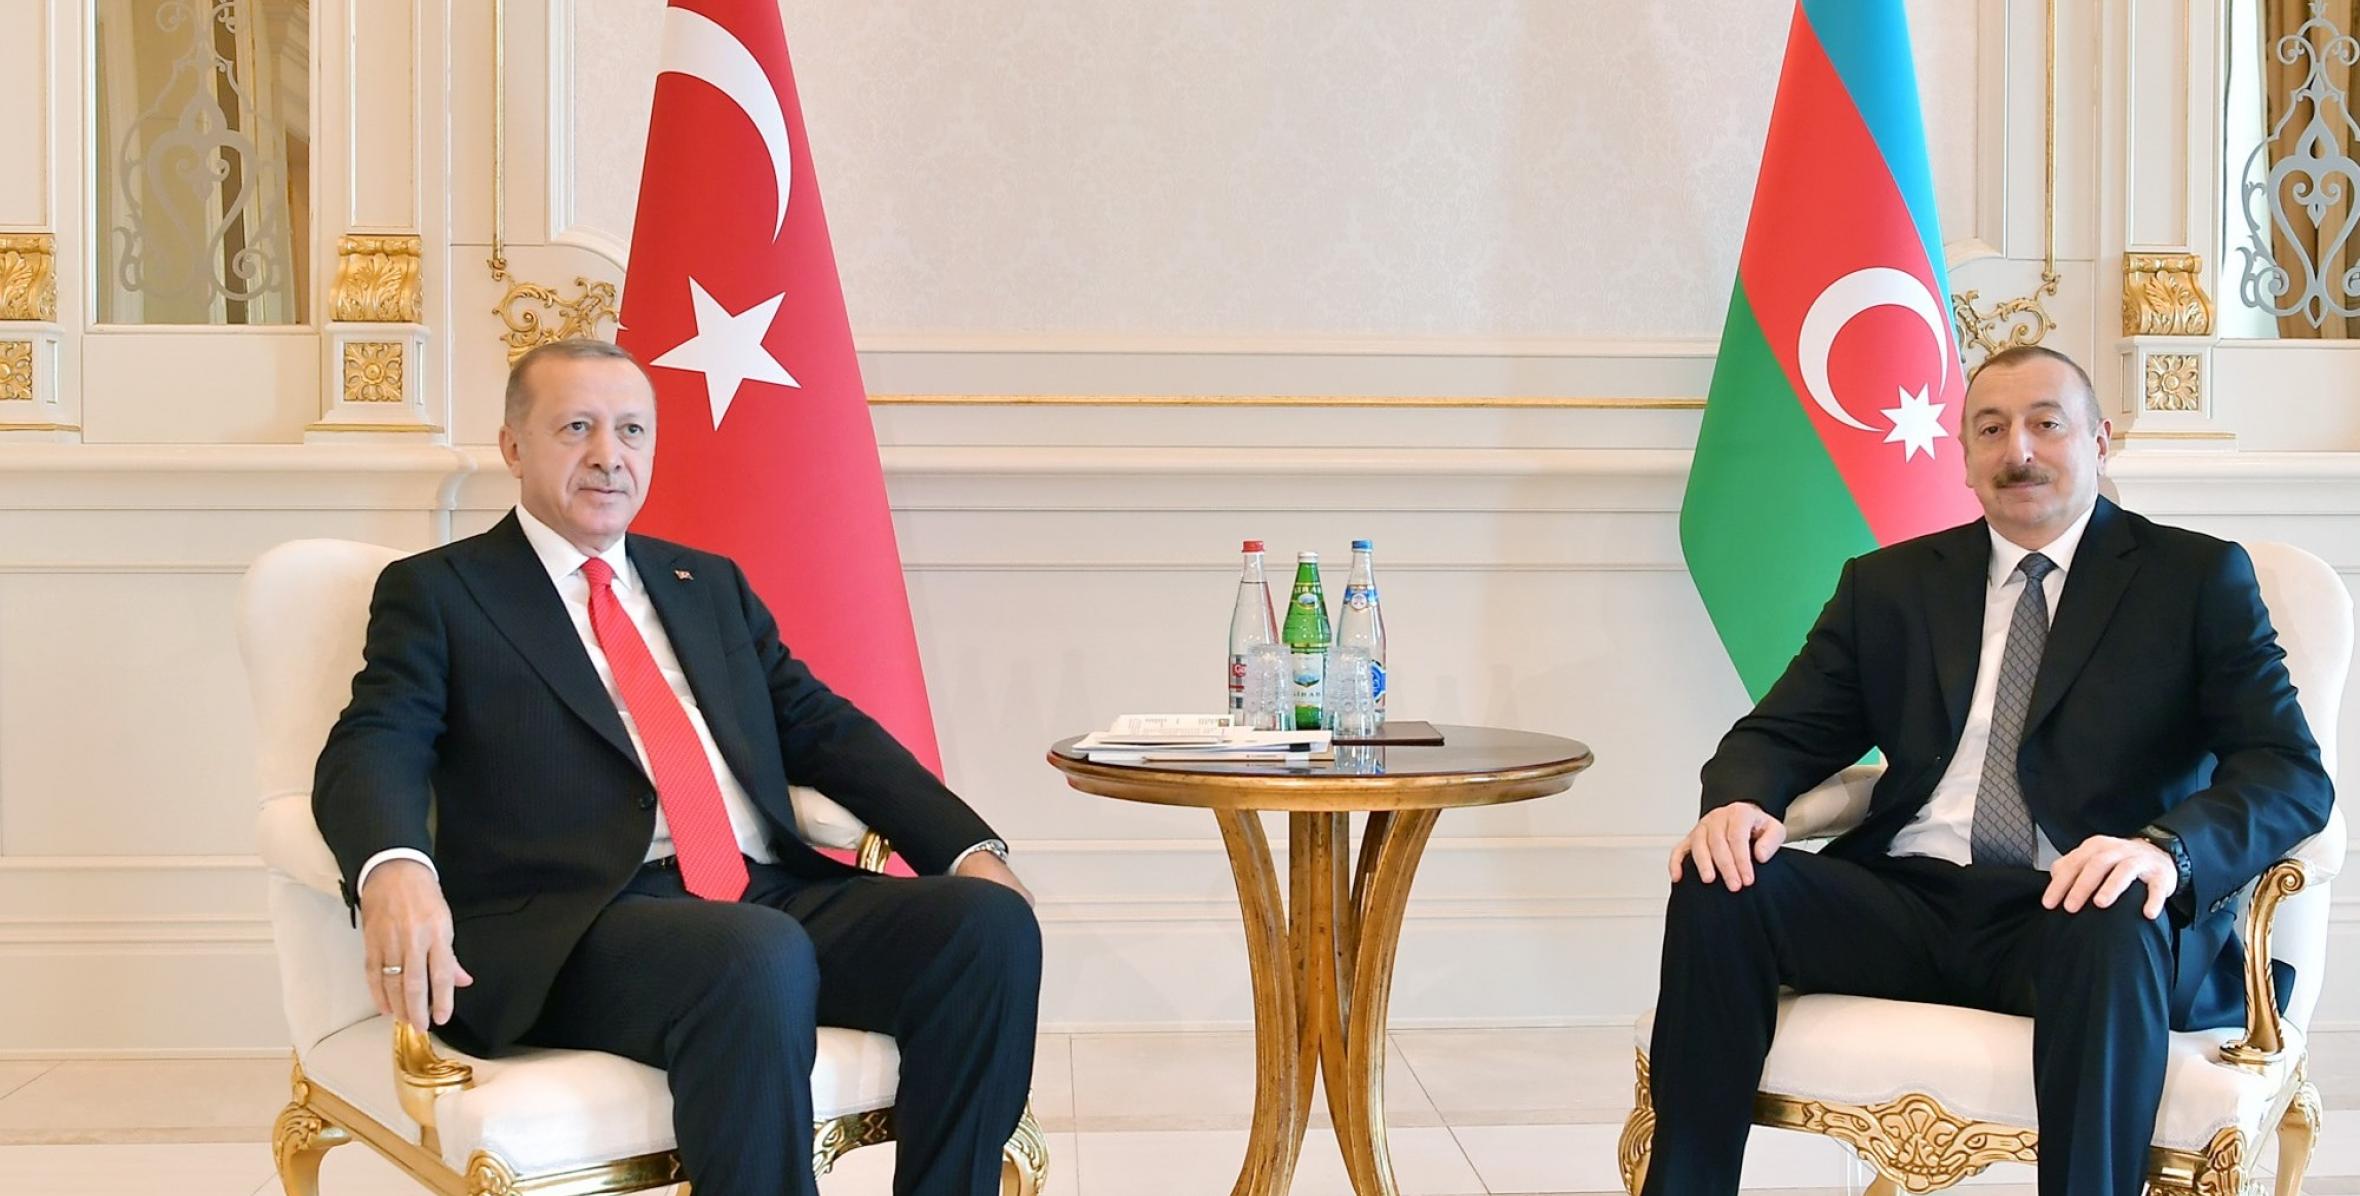 Ilham Aliyev met with President of Turkey Recep Tayyip Erdogan